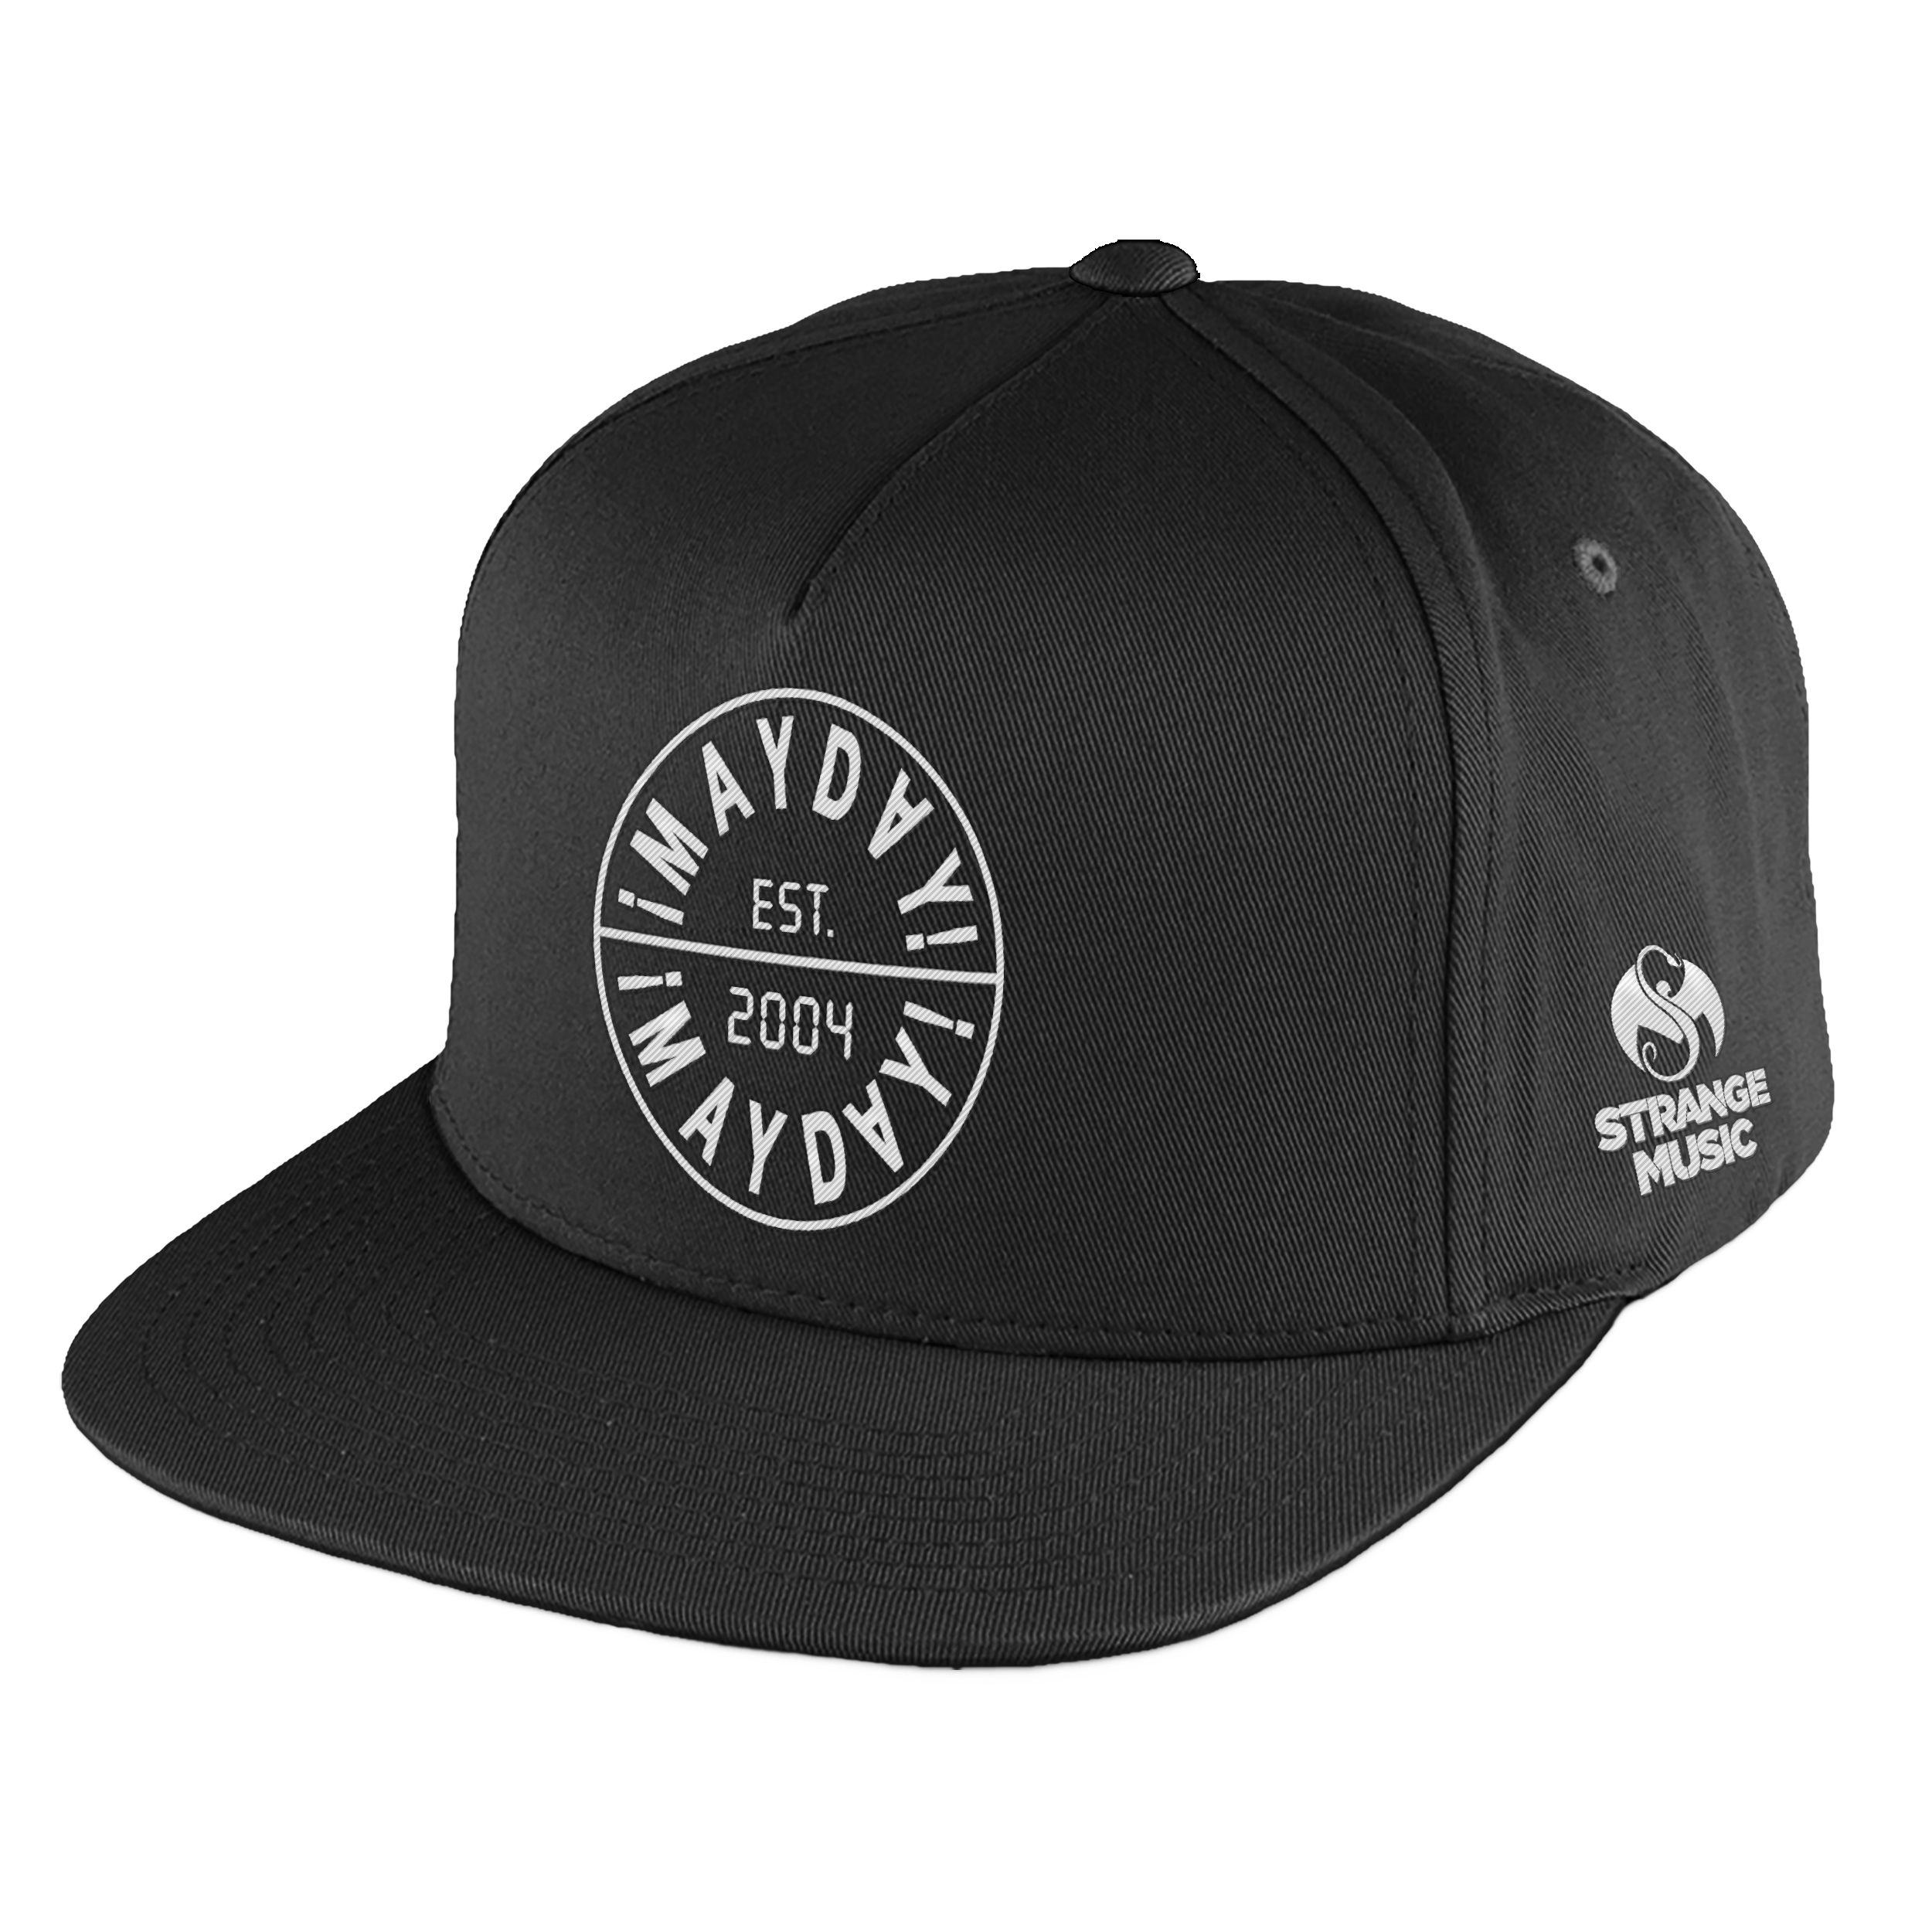 ¡MAYDAY! - Black Established Hat Snapback